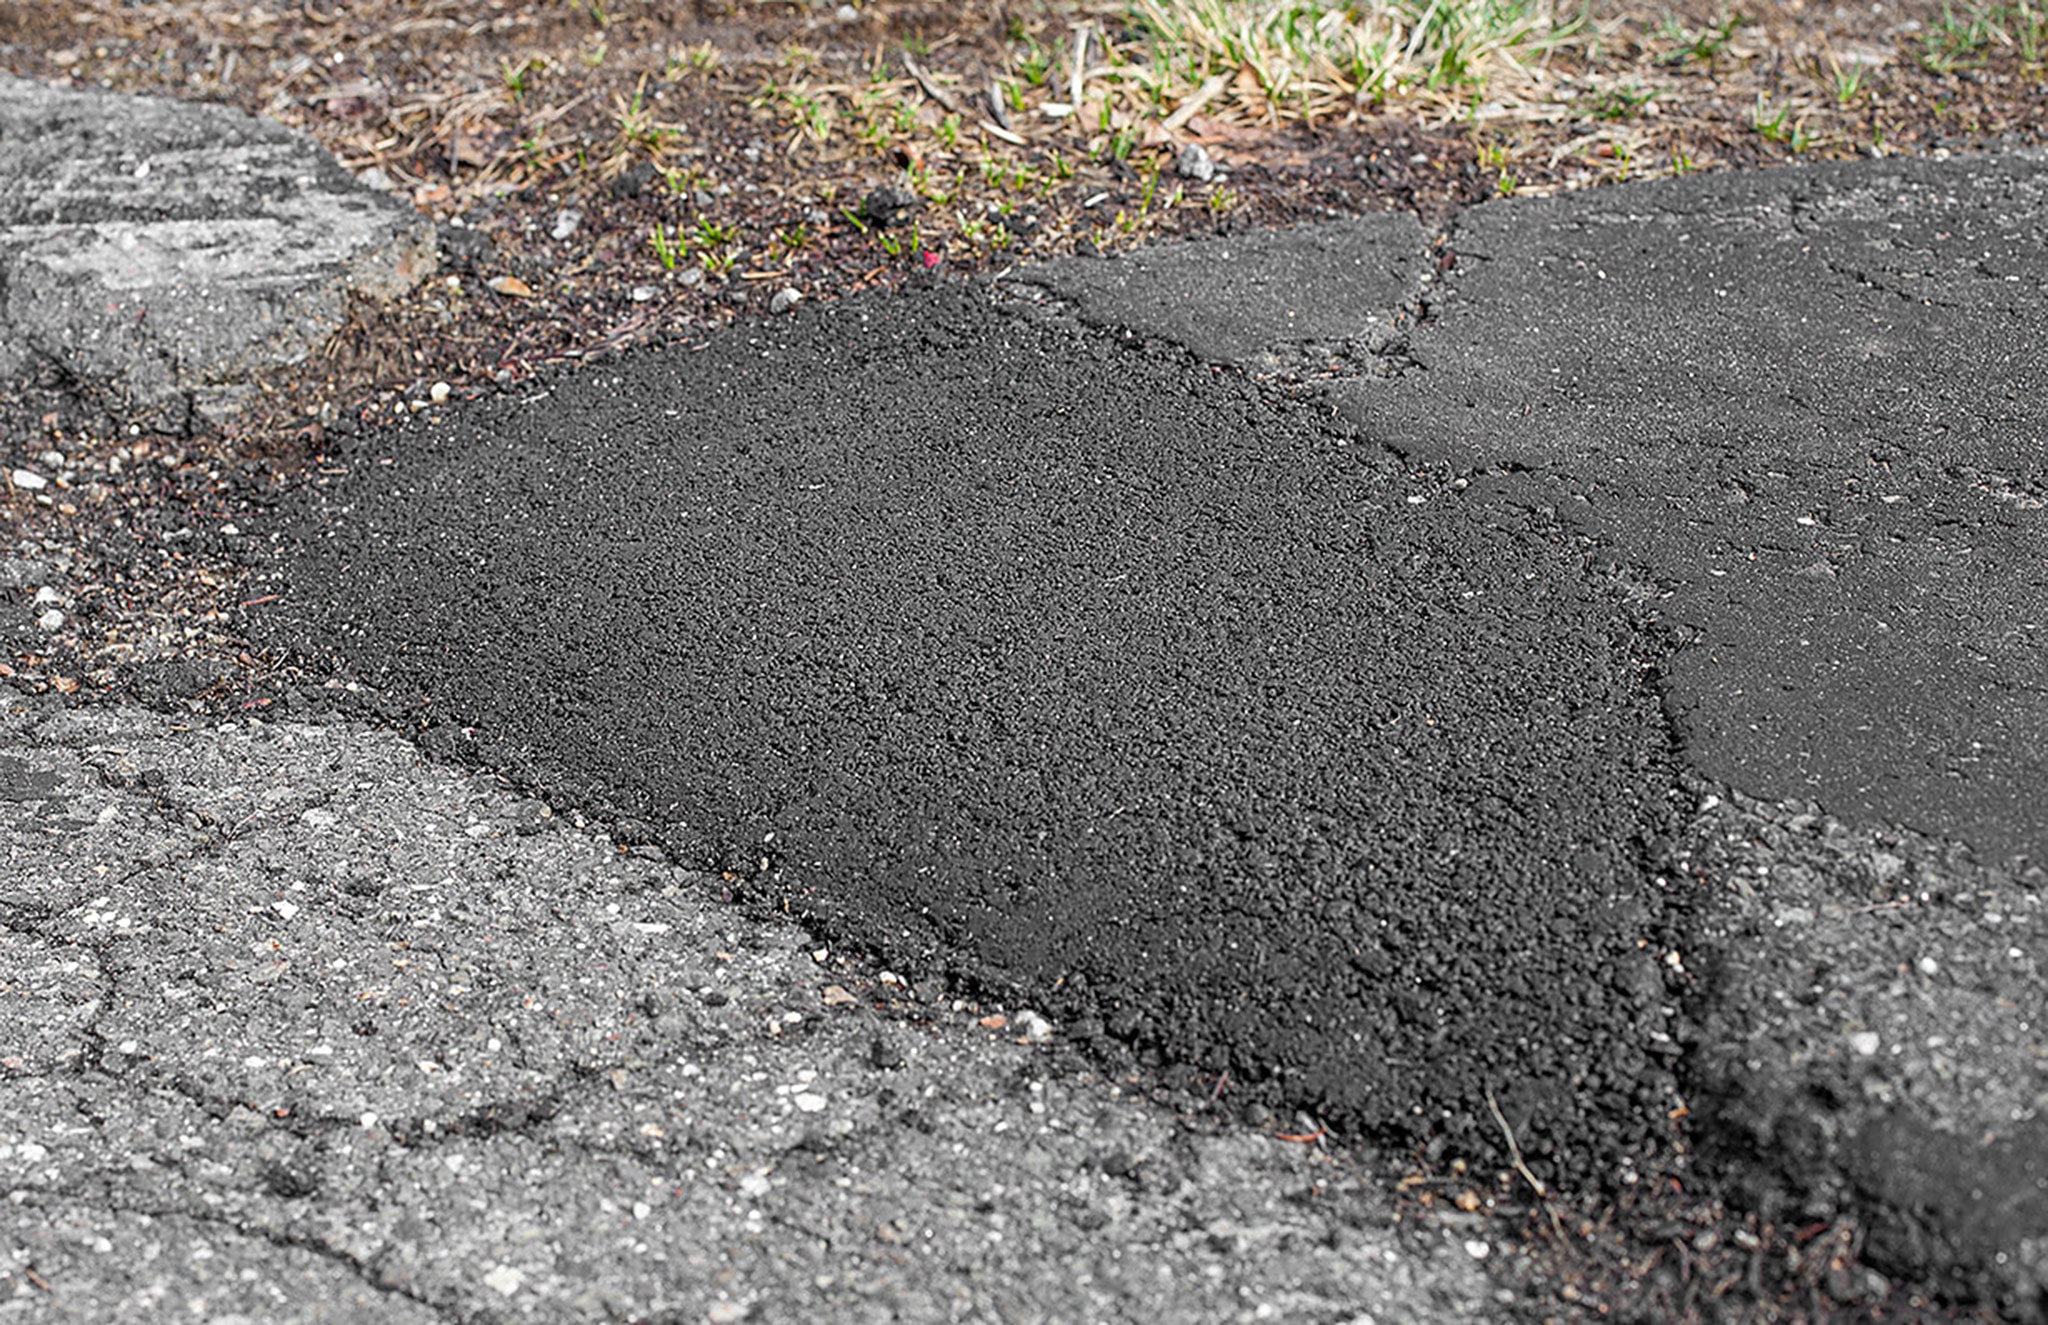 View of ground after asphalt repair